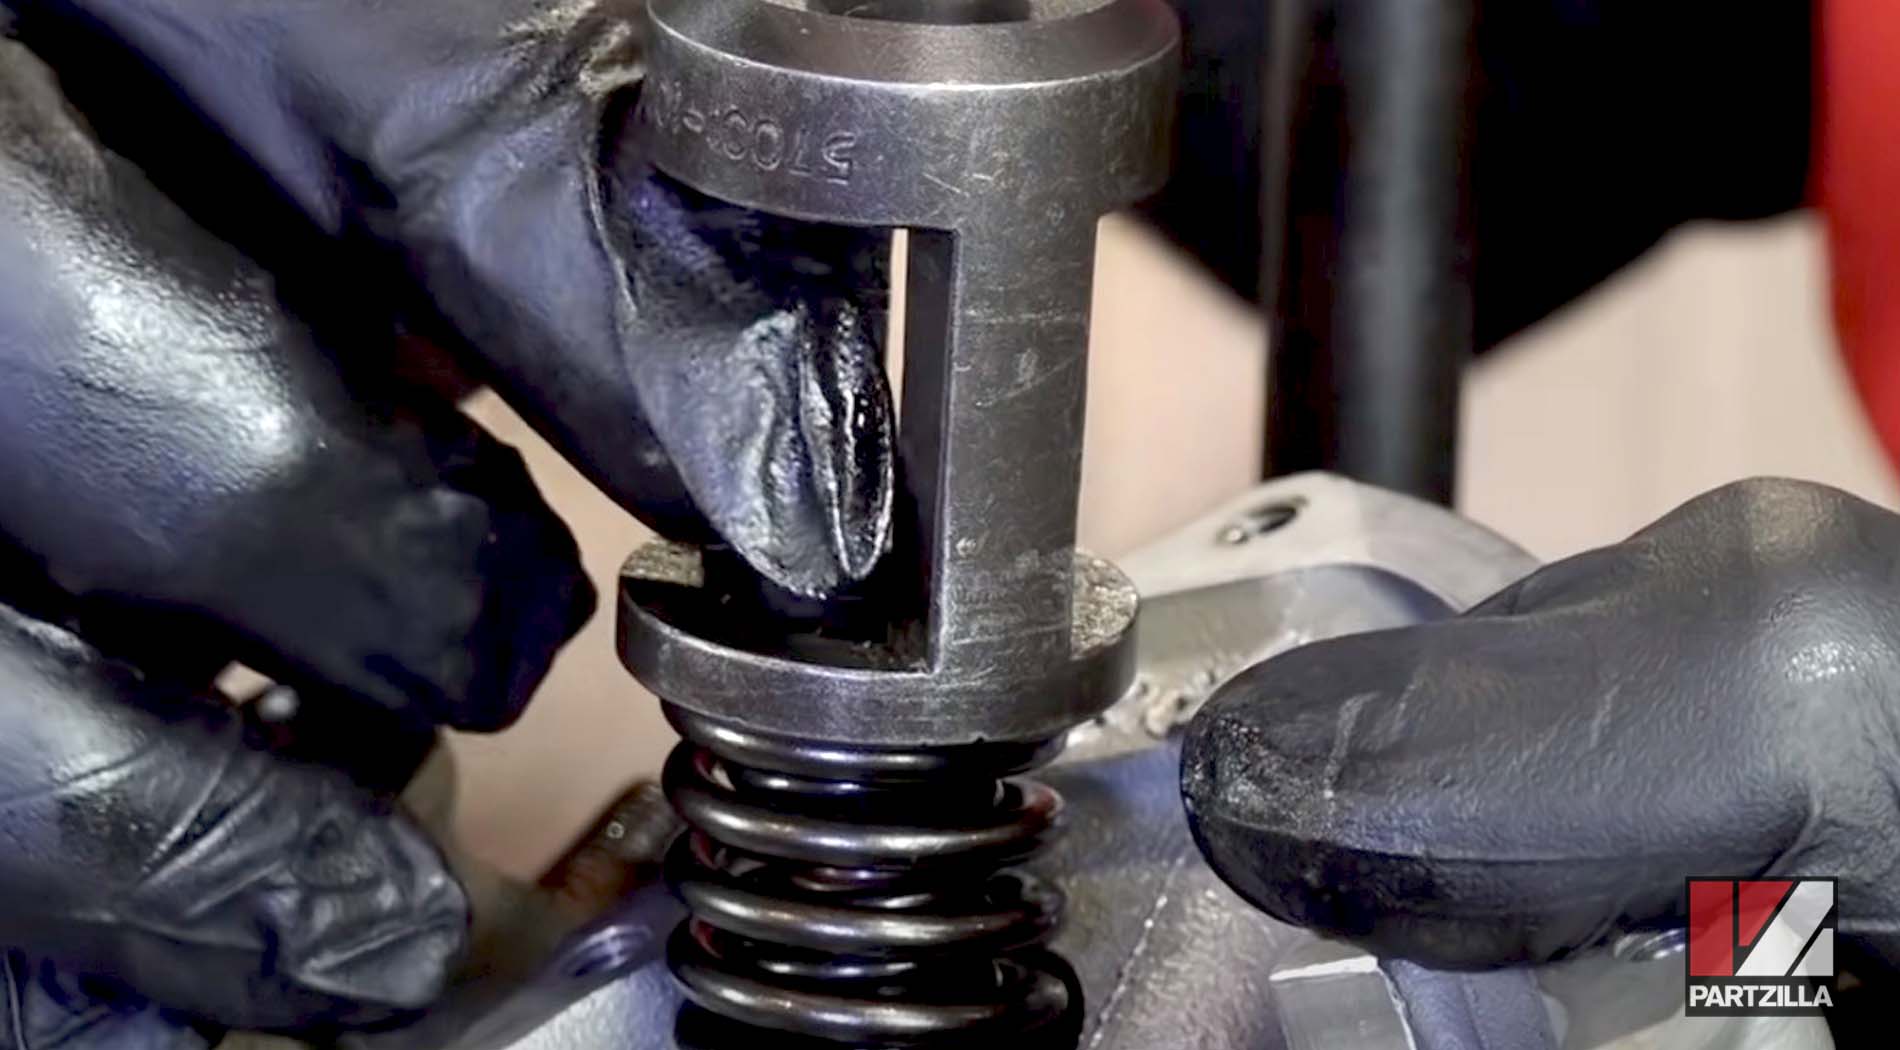 Honda TRX400 top end rebuild valve keeper installation